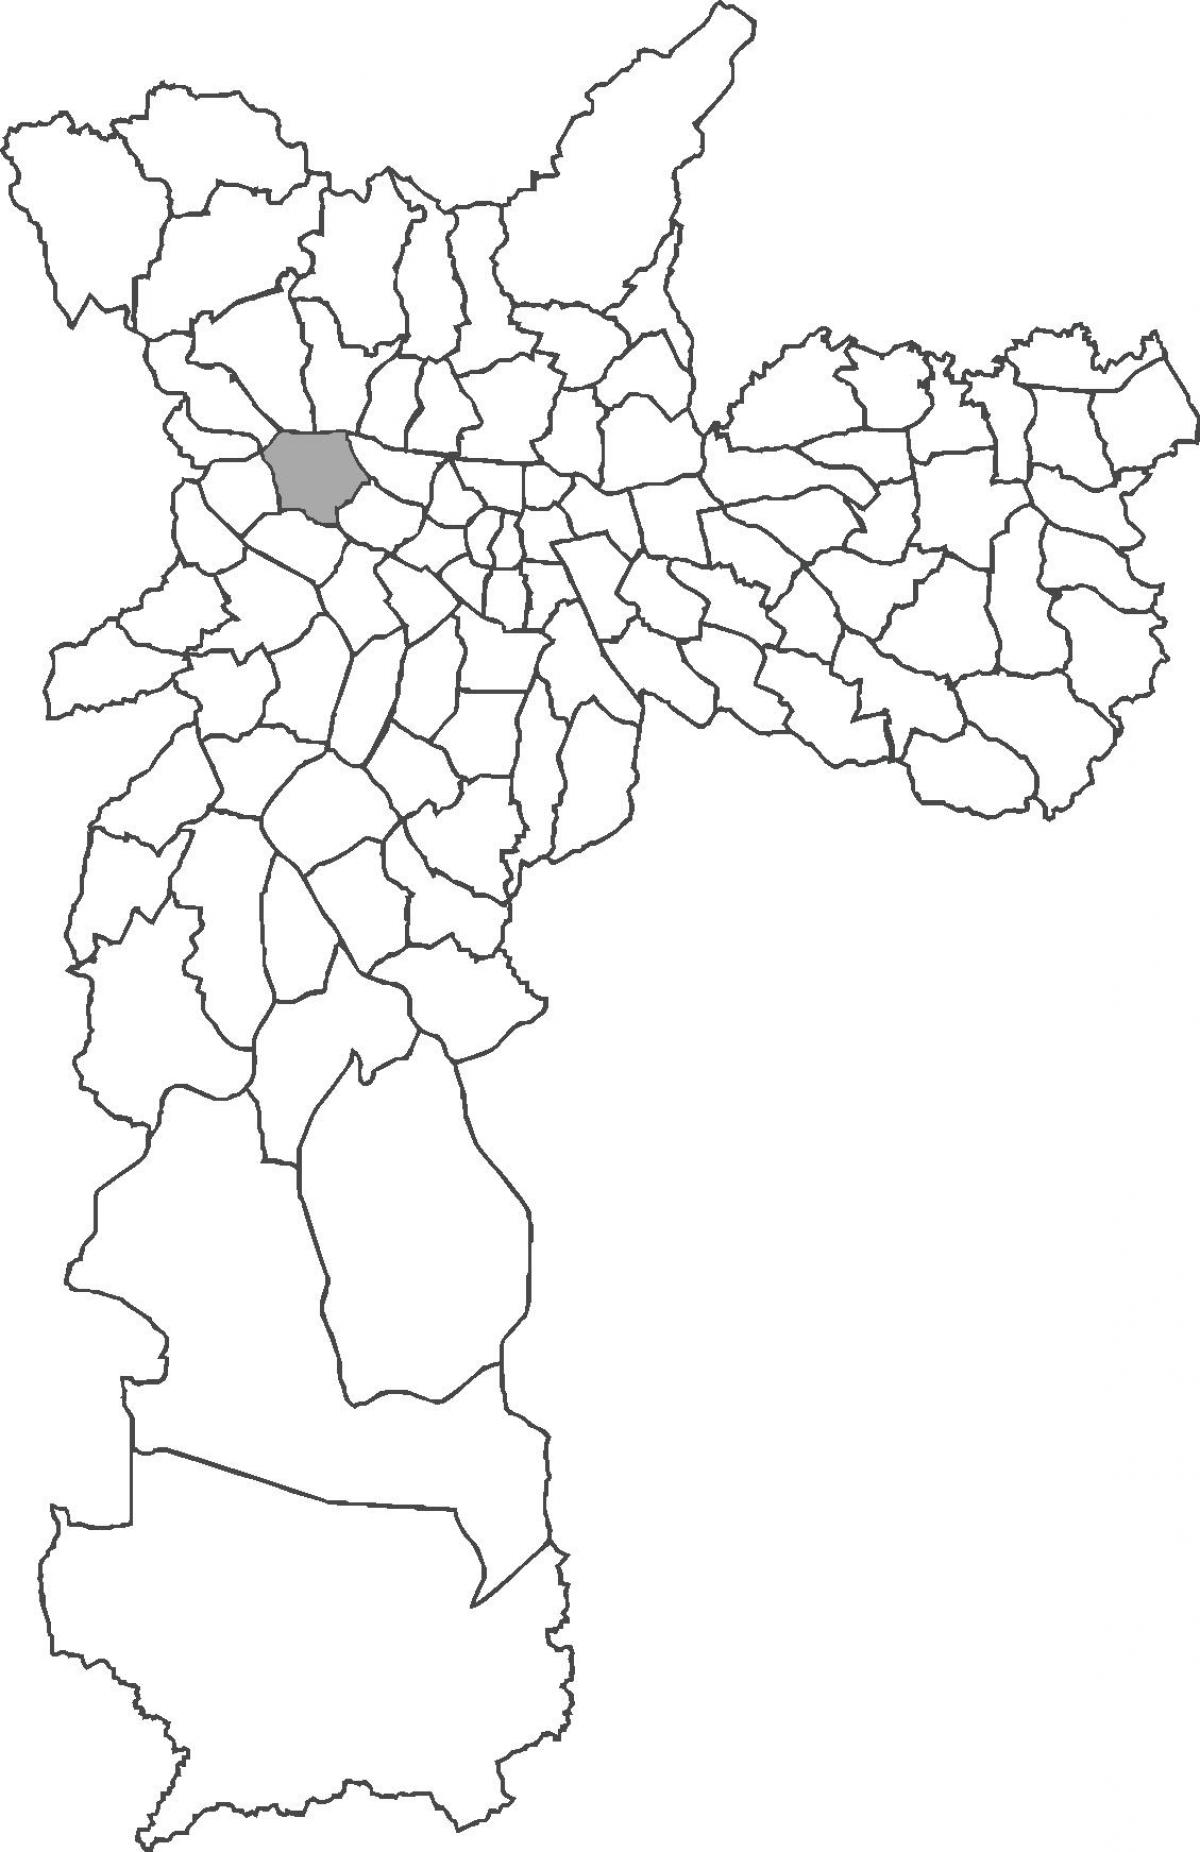 Map of Lapa district